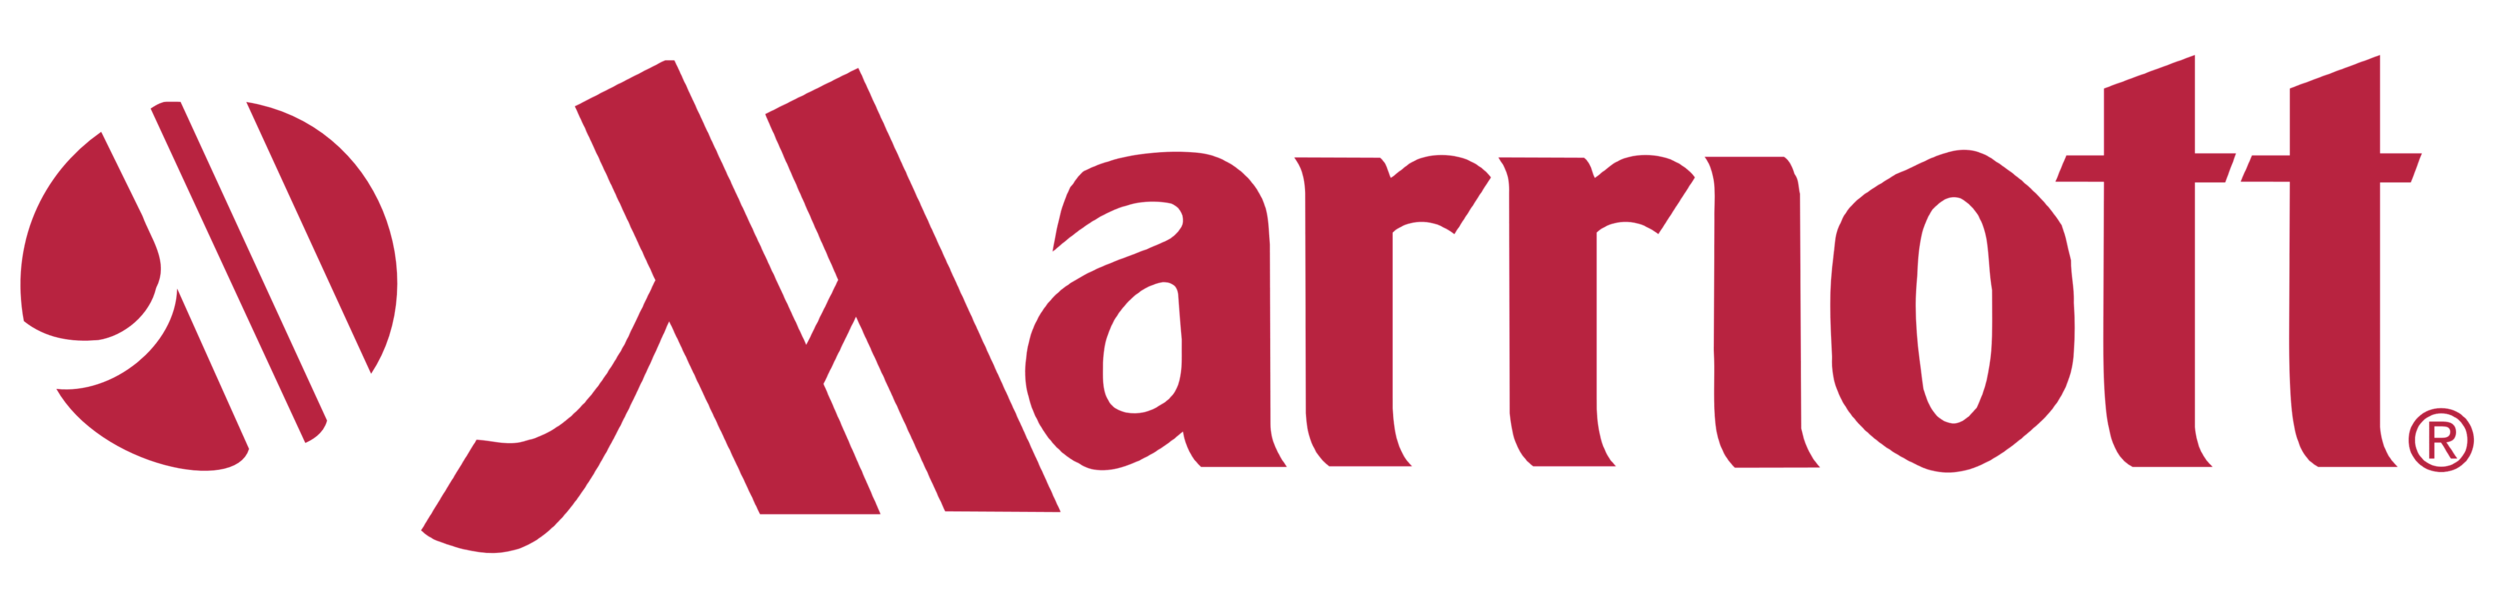 Marriott_logo_horizontal.png